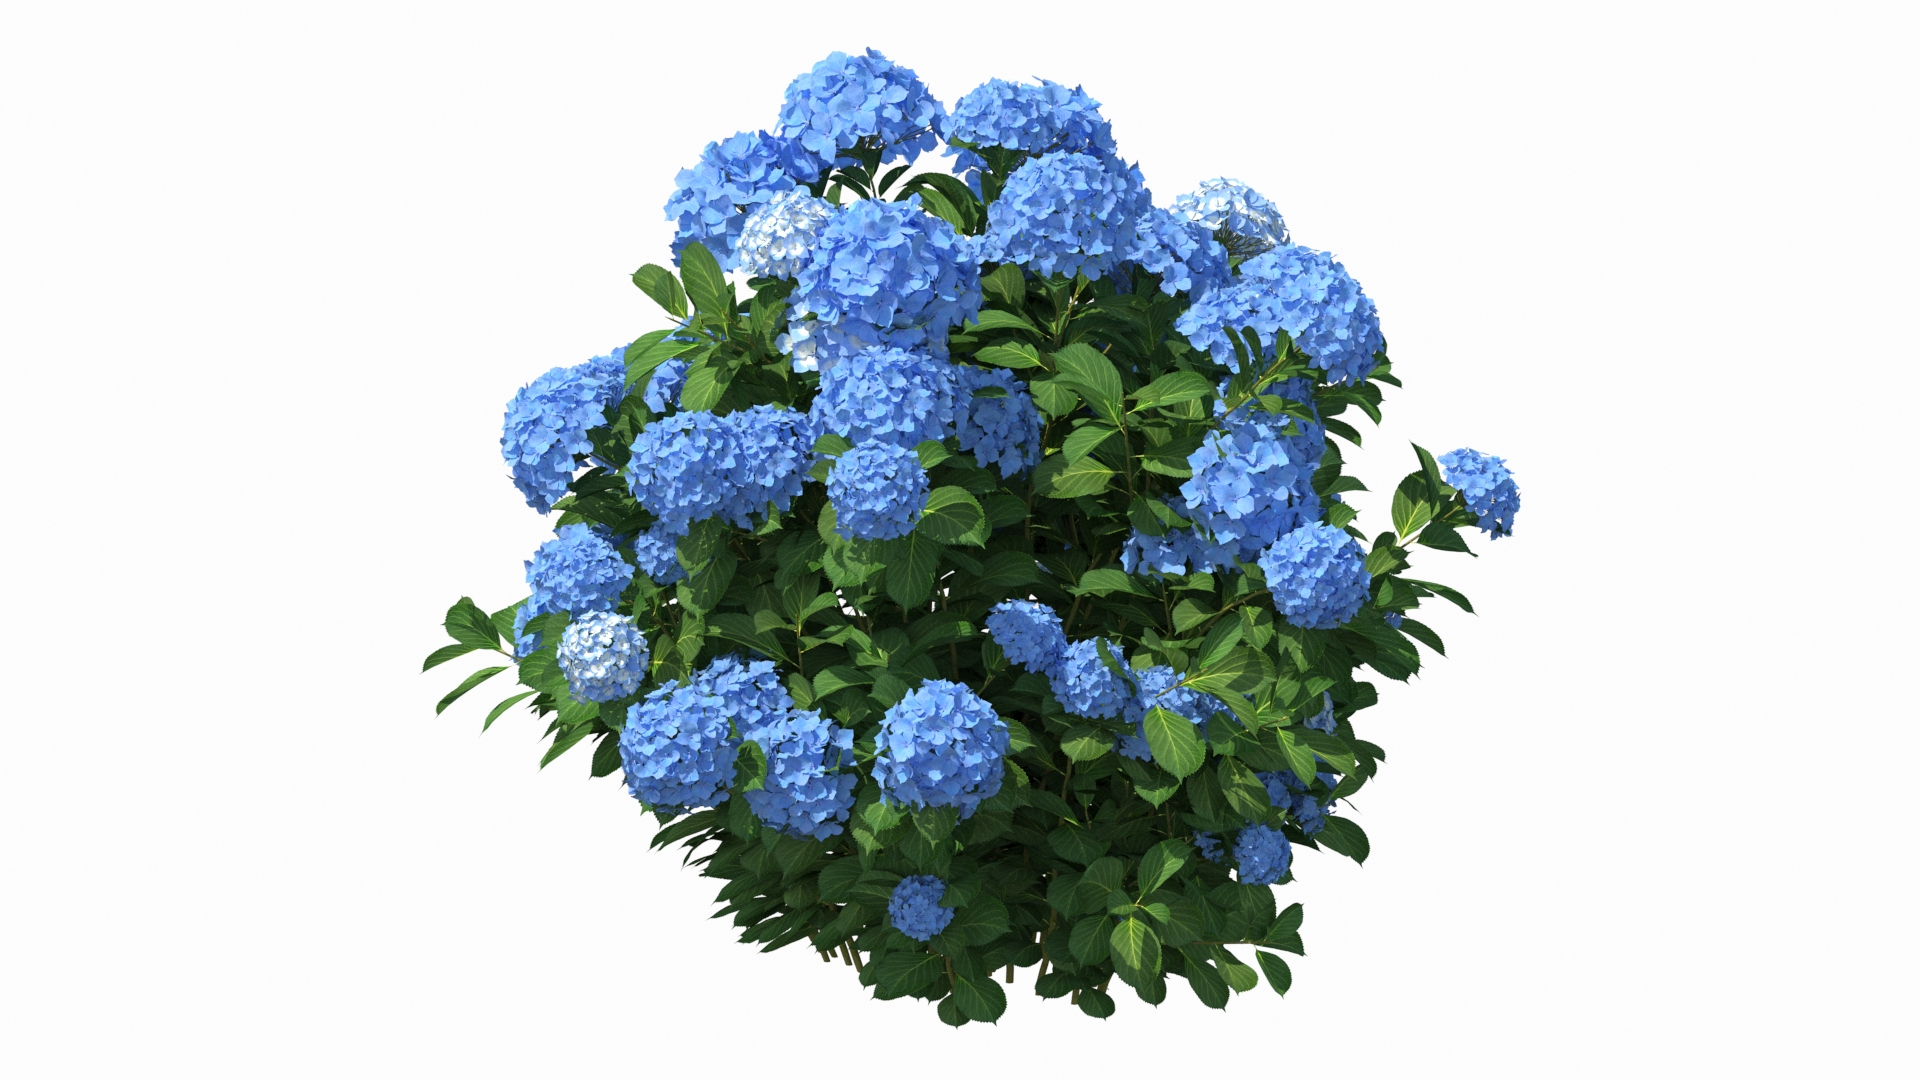 3D hydrangea macrophylla nikko blue https://p.turbosquid.com/ts-thumb/bK/QZ88sC/qCMUv9U3/hydrangea_macrophylla_nikko_blue_bush_360/jpg/1597172250/1920x1080/turn_fit_q99/4e9d004c879426ca6f9bf883d9f9f9f6d49054c7/hydrangea_macrophylla_nikko_blue_bush_360-1.jpg